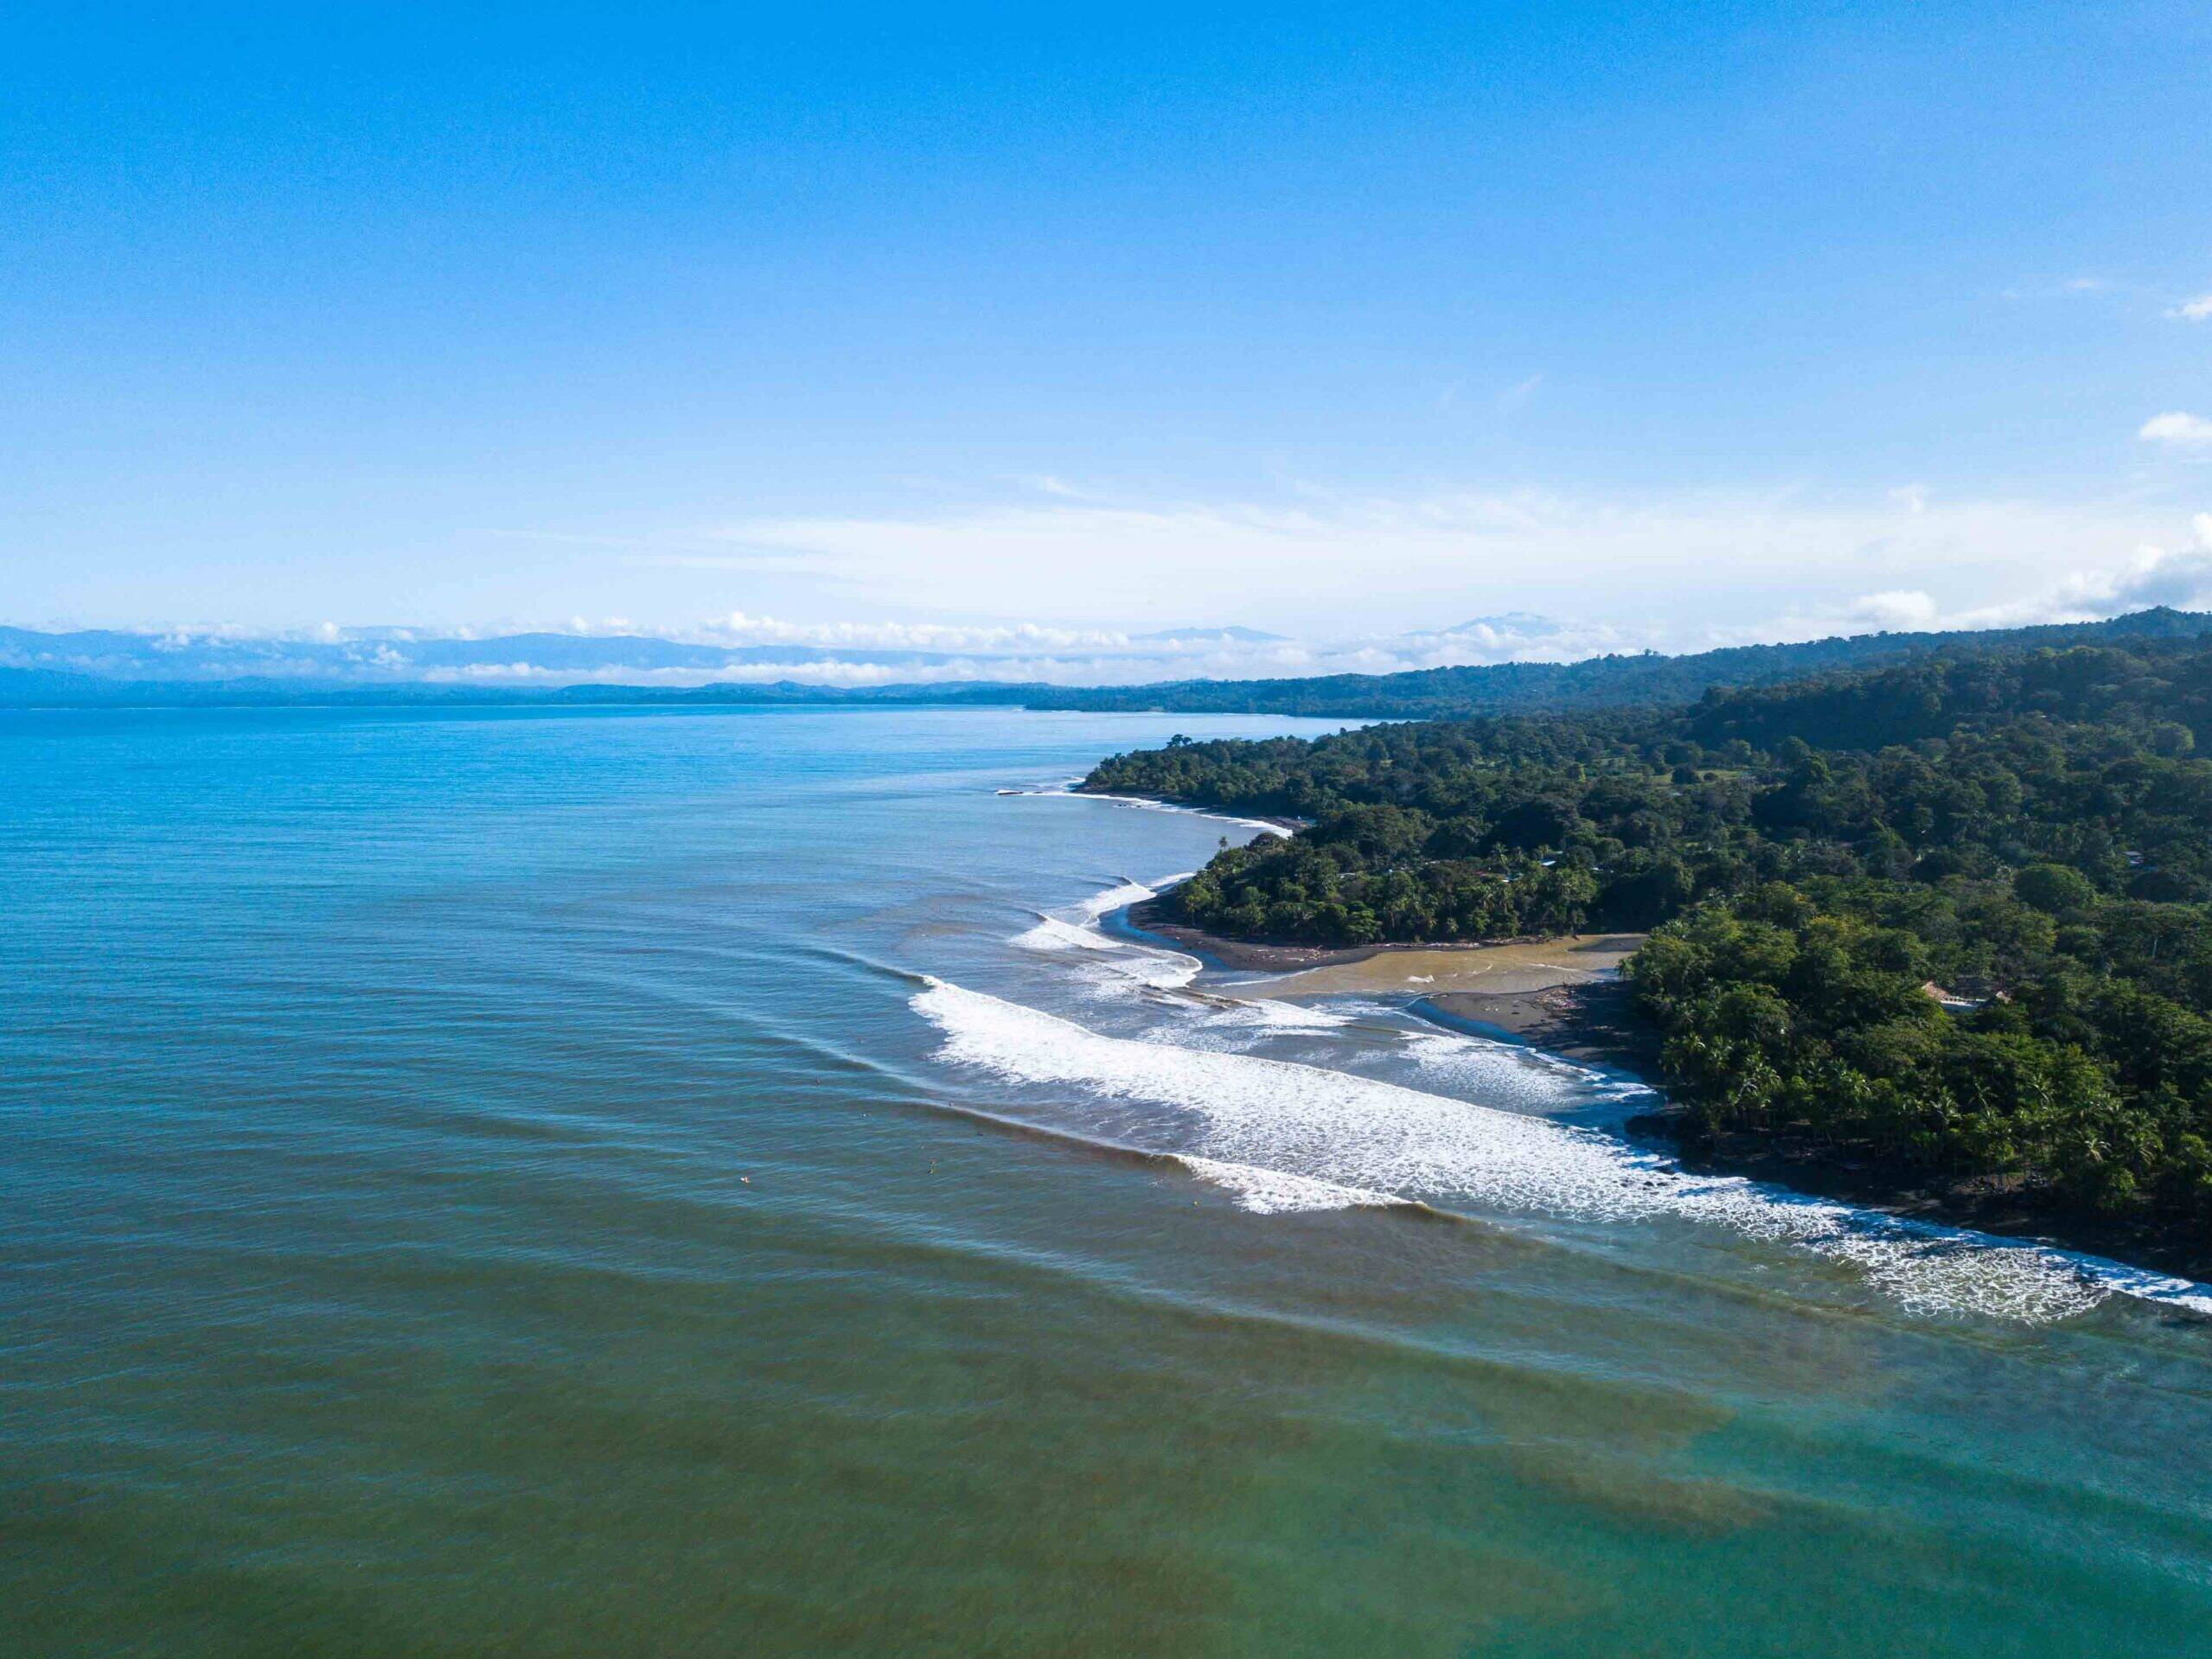 Drone photo of Pavones Costa Rica